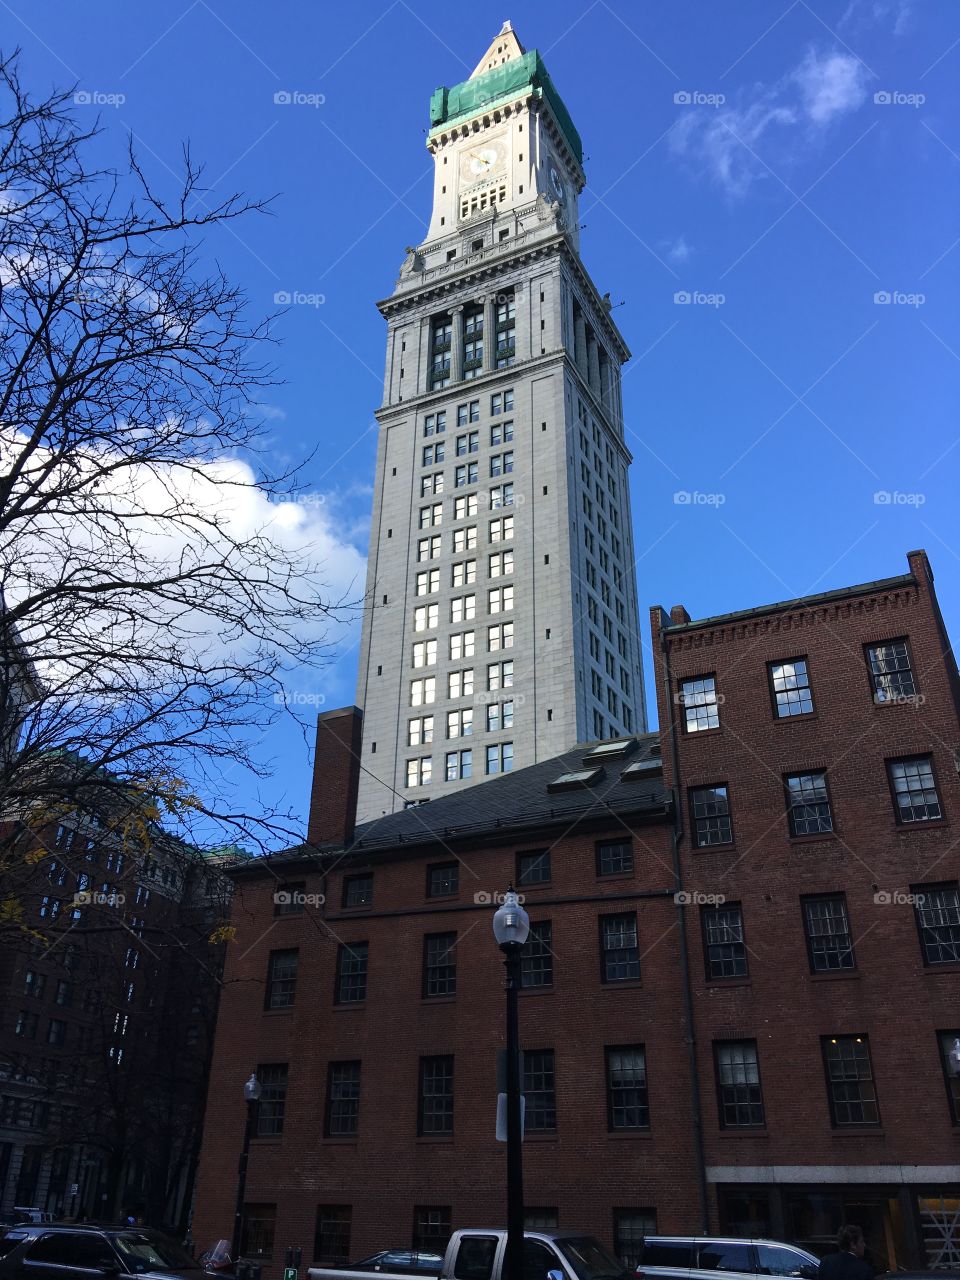 Custom Tower
Boston